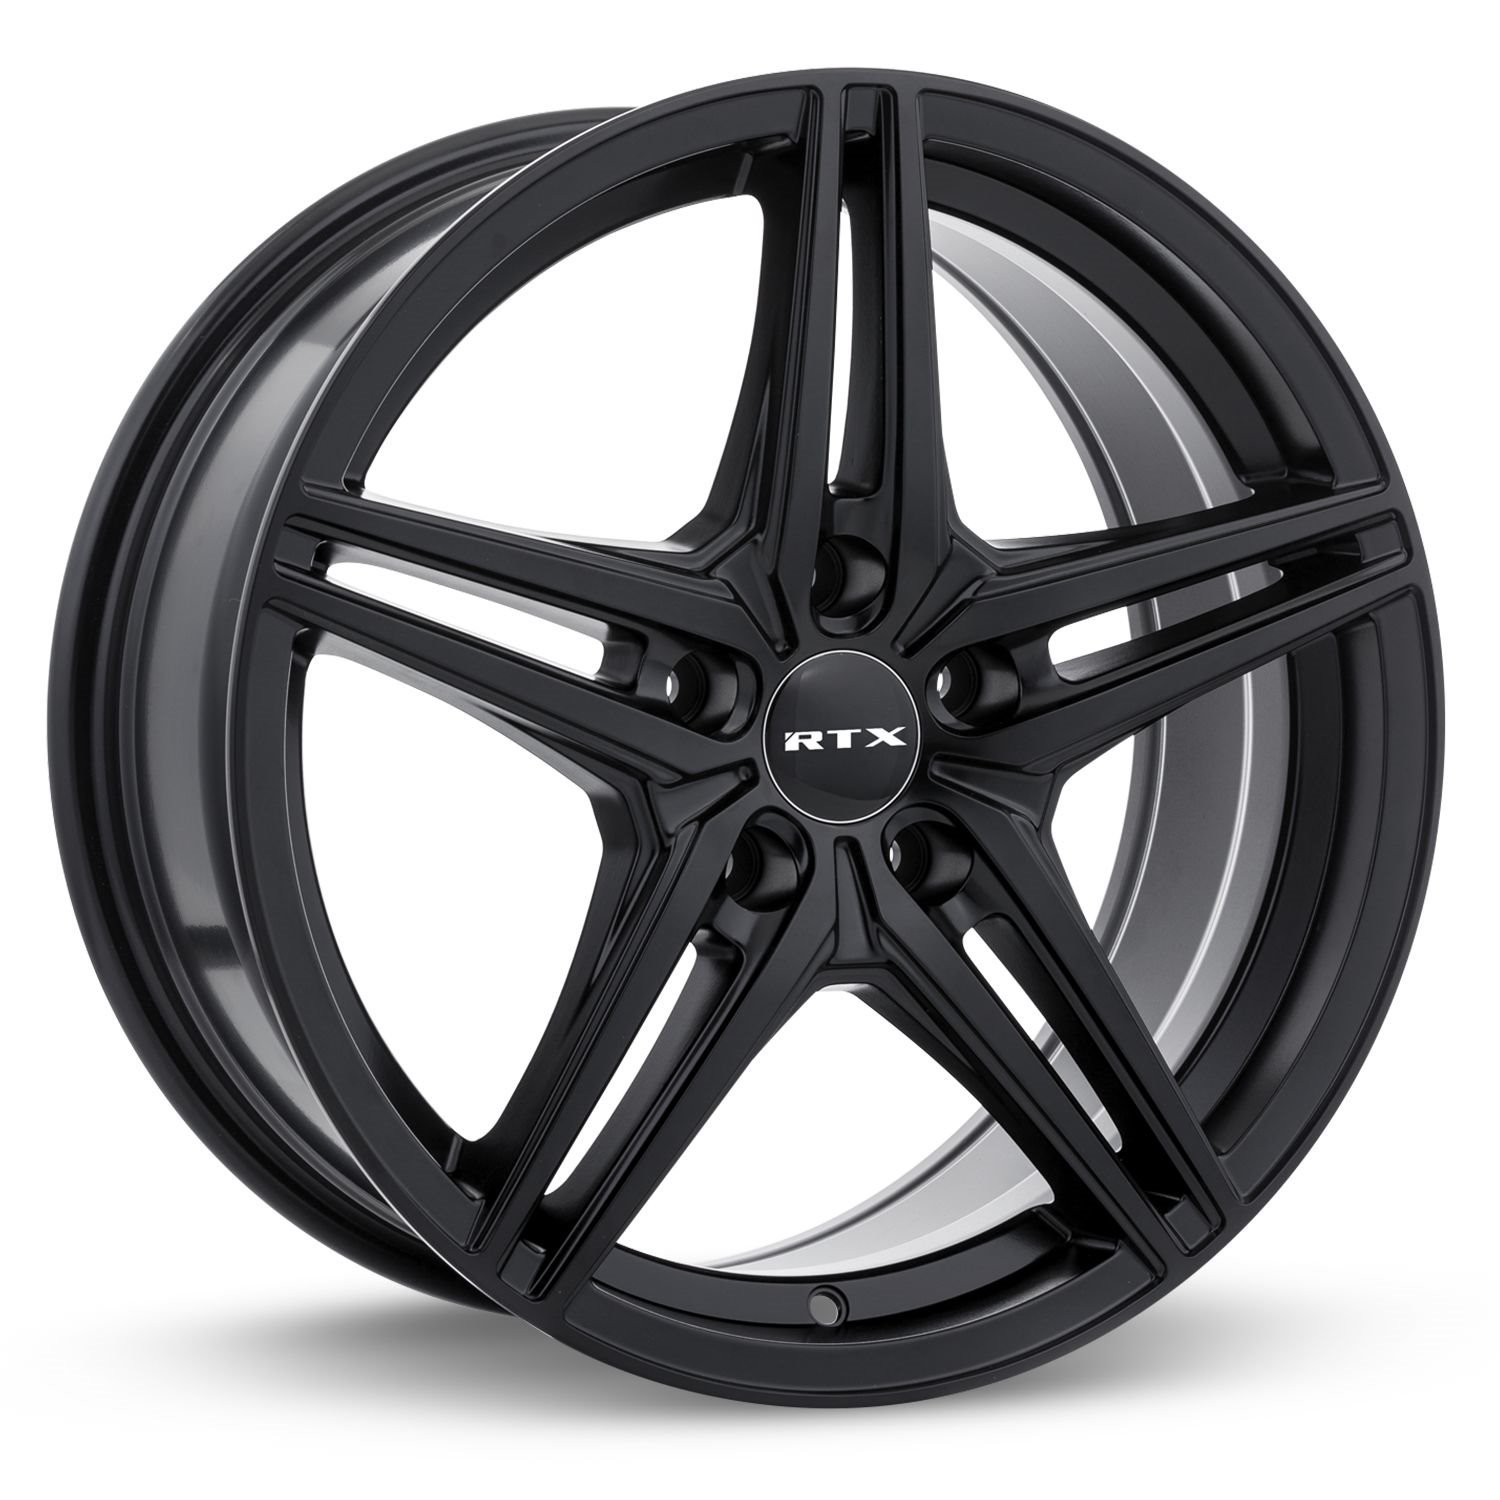 082049 RTX-Series Bern Wheel [Size: 18" x 8"] Satin Black Finish